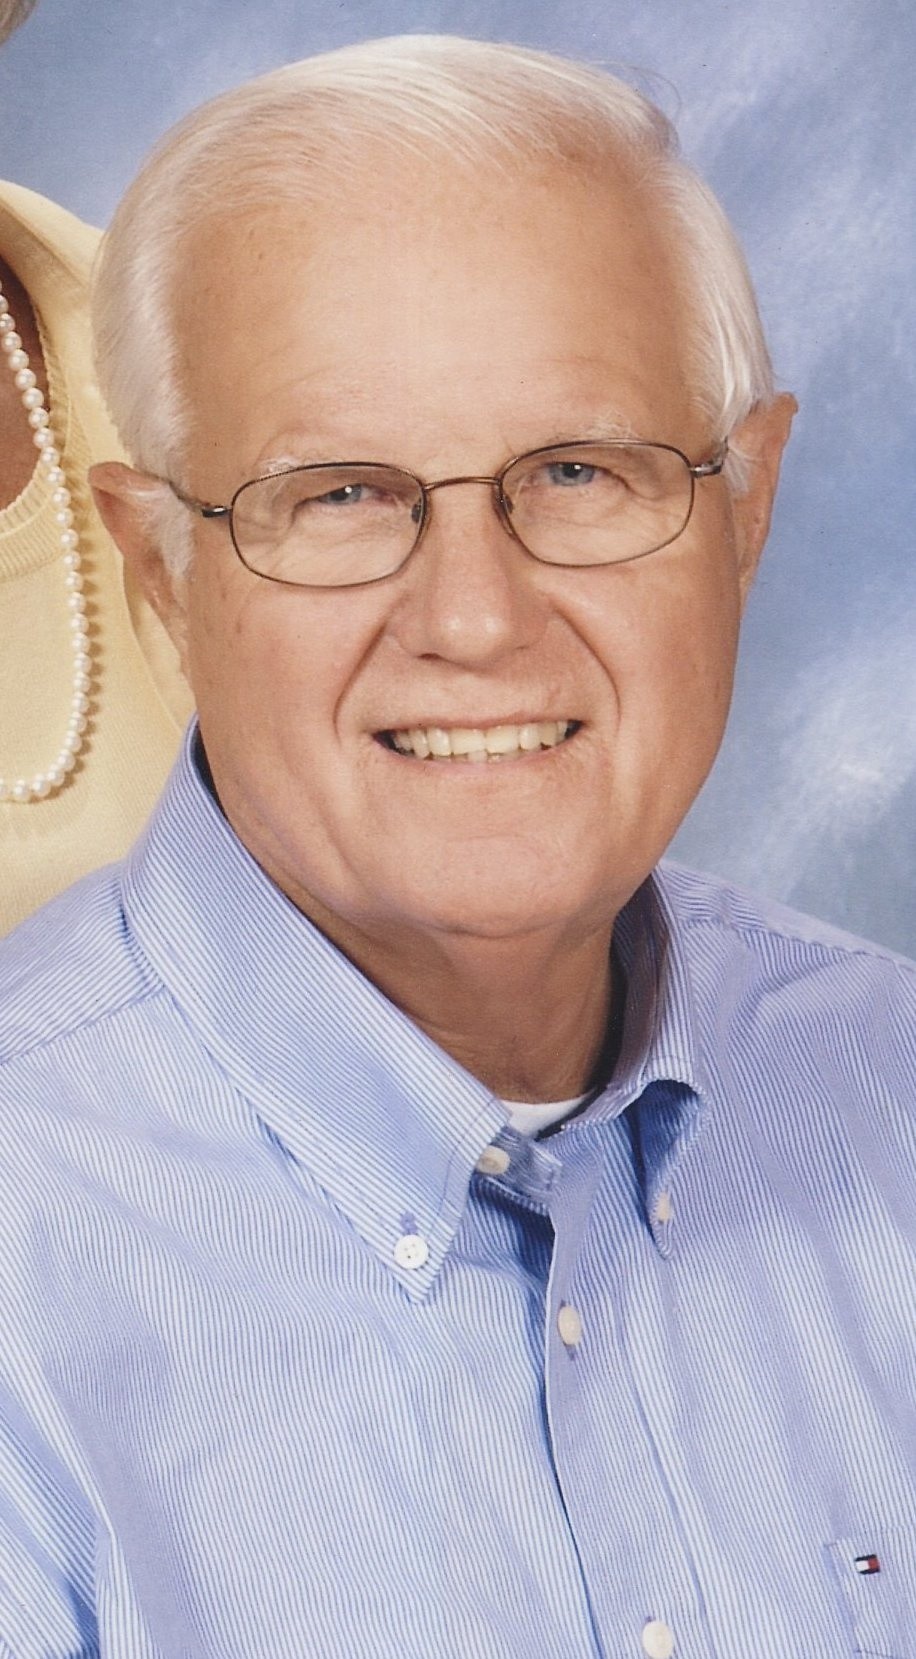 Larry Sanders Obituary - Sylacauga, AL